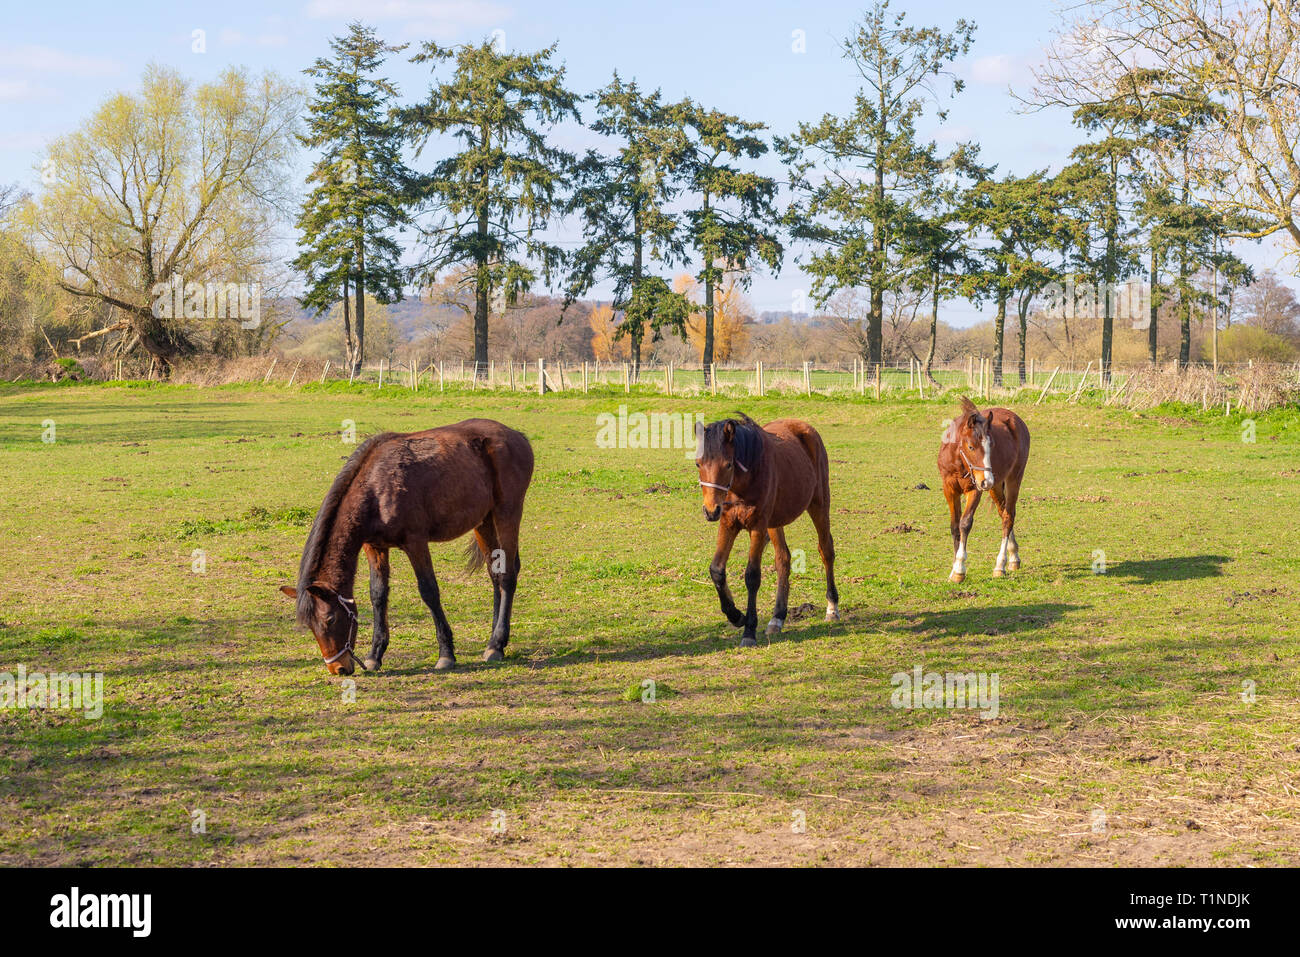 Three horse foals walking in a line across a field. Stock Photo